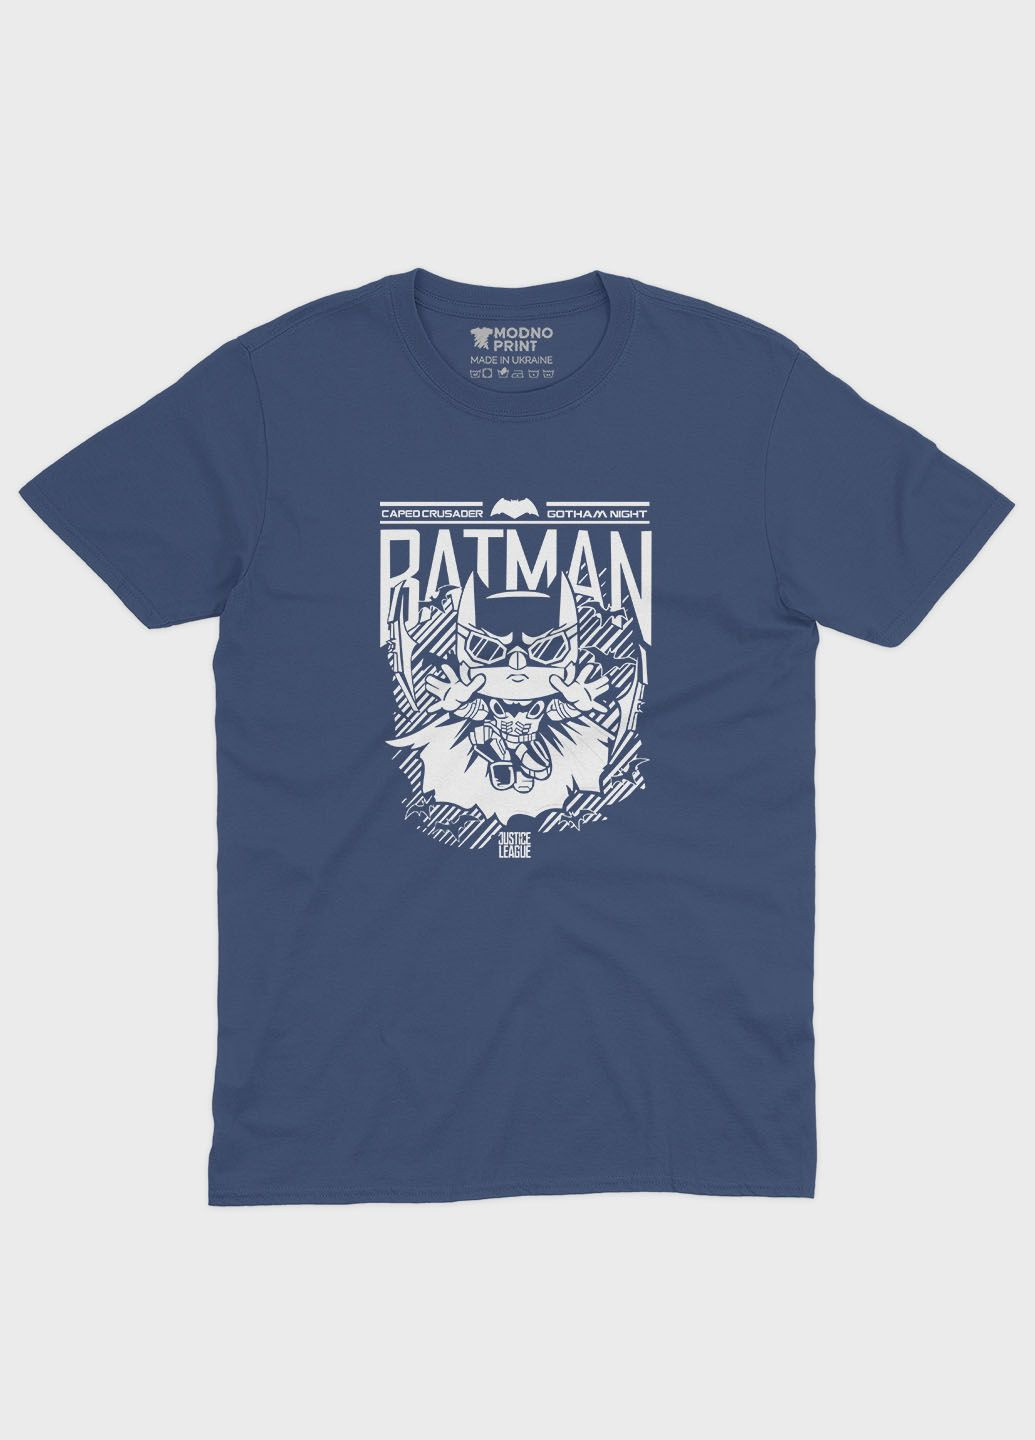 Мужская футболка с принтом супергероя - Бэтмен (TS001-1-NAV-006-003-041-F) Modno - (292120366)